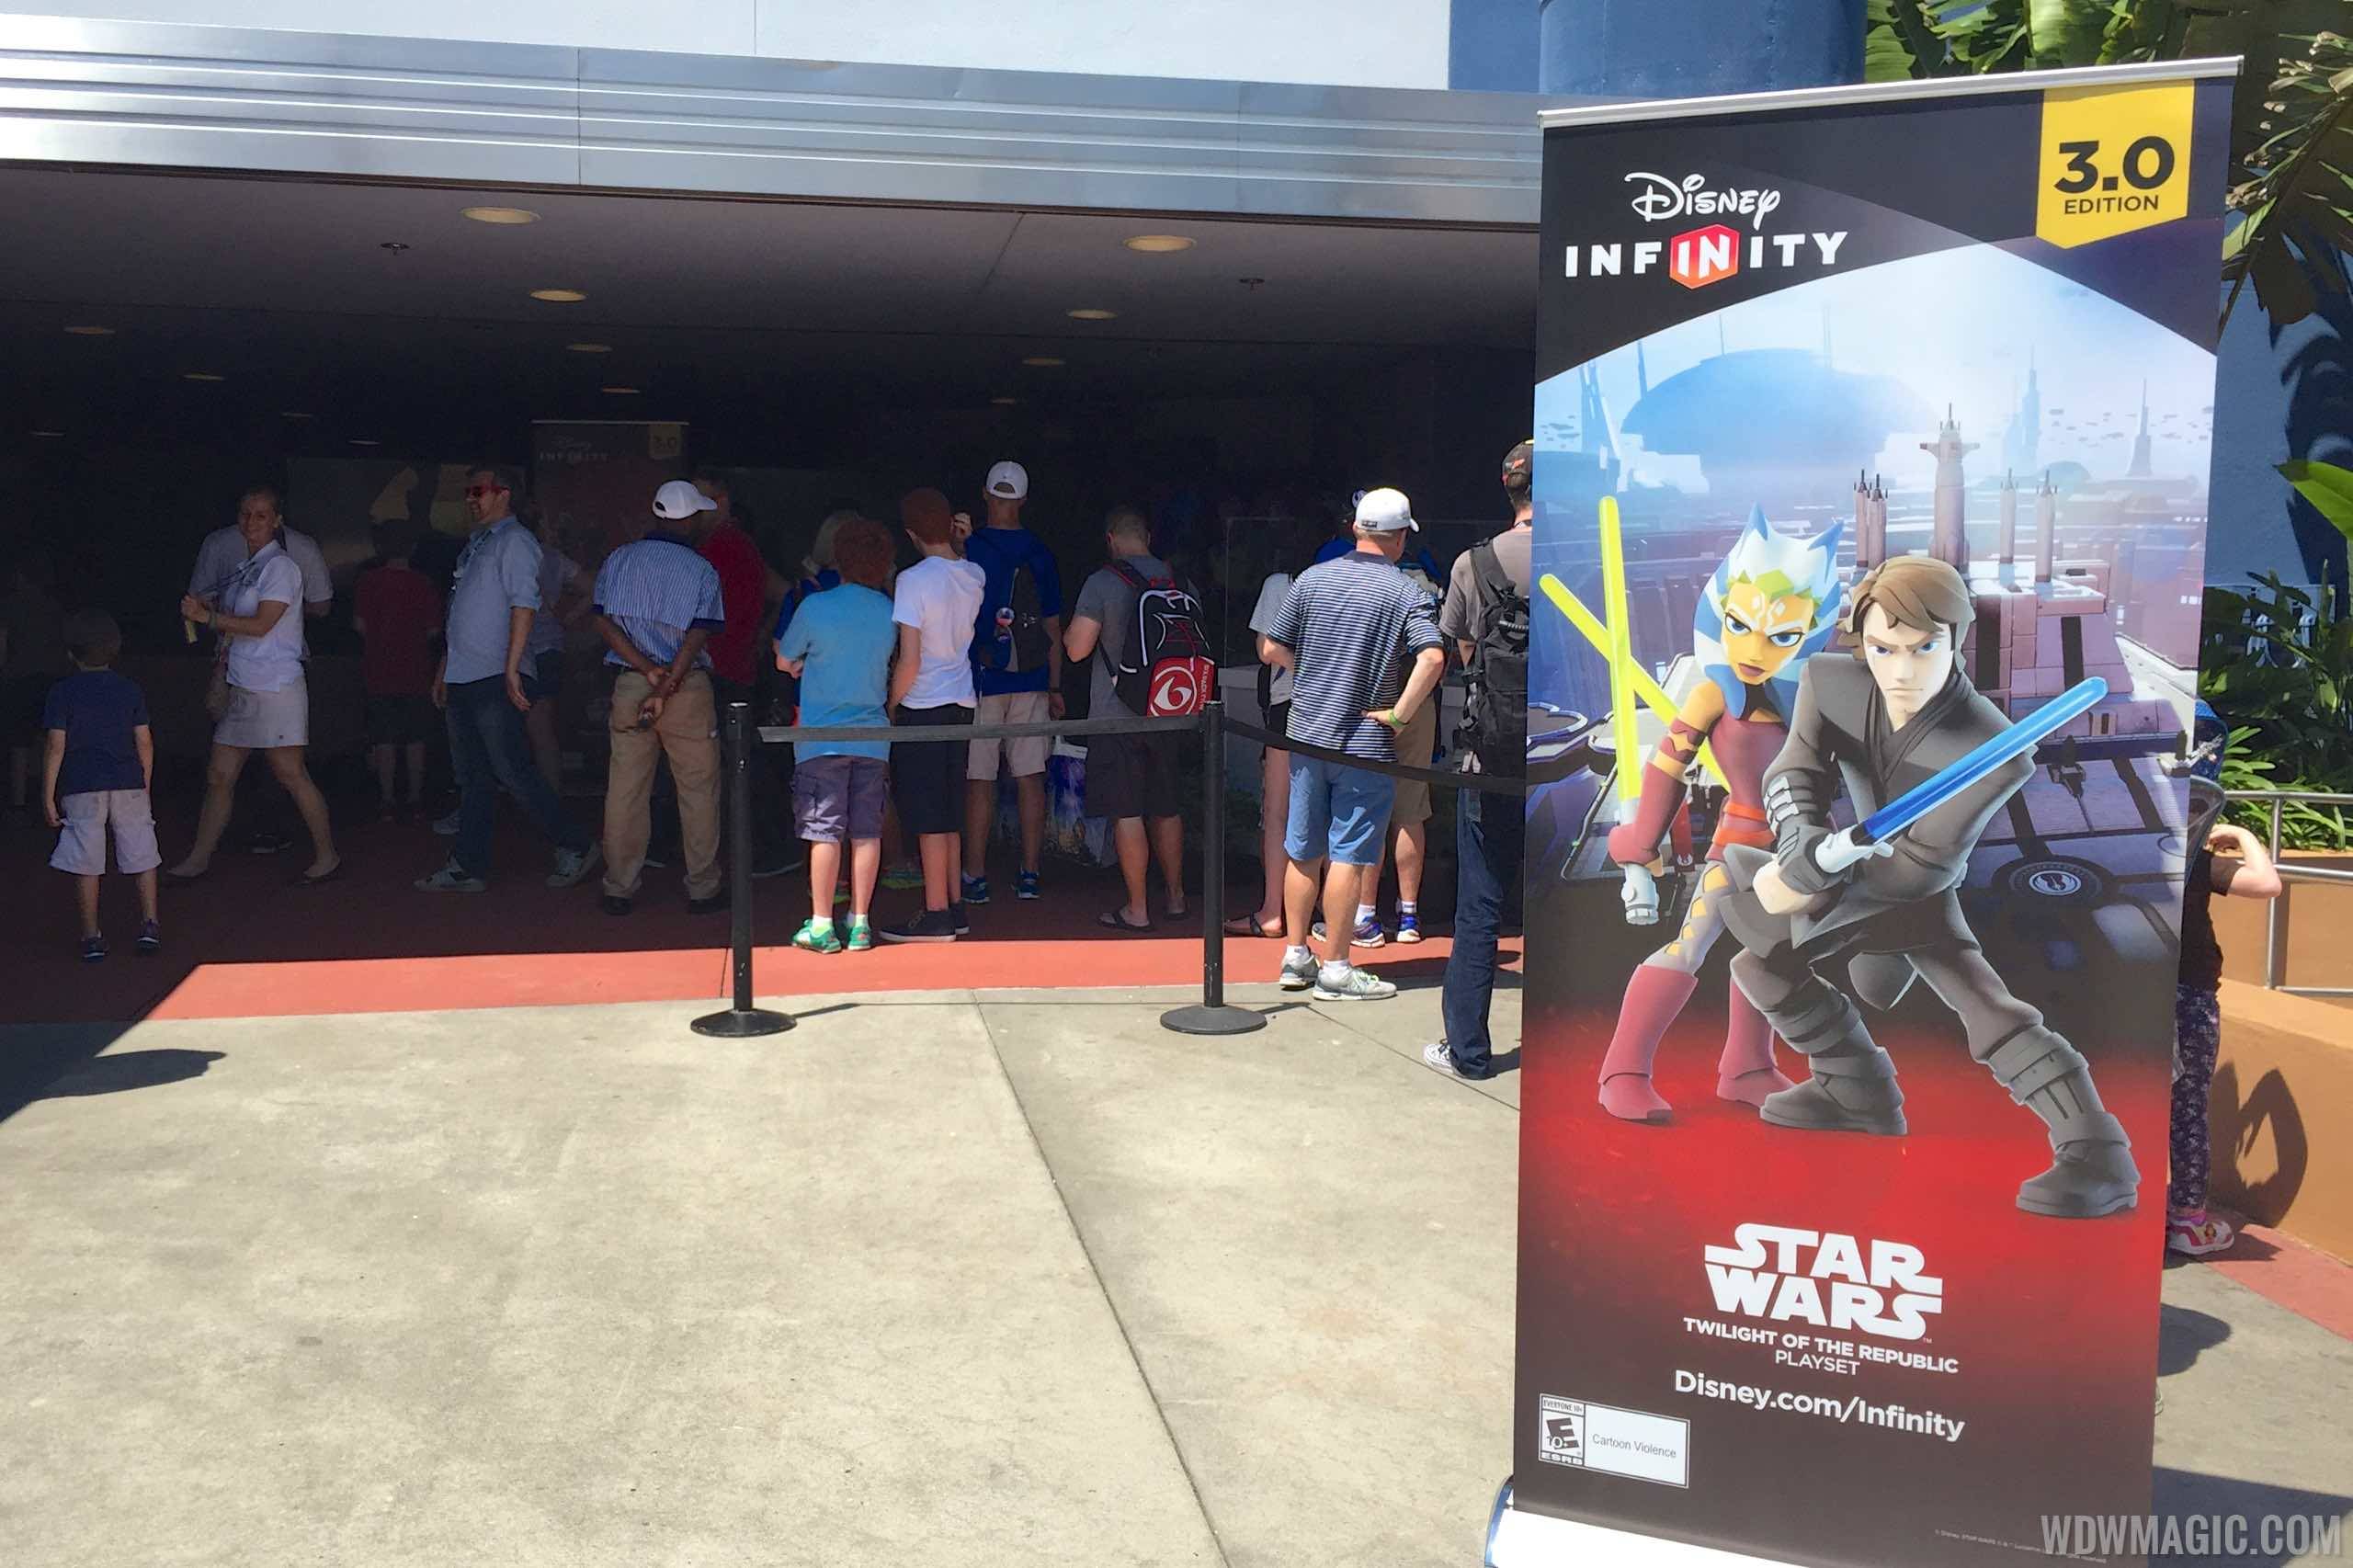 Disney Infinity 3.0 Star Wars preview area